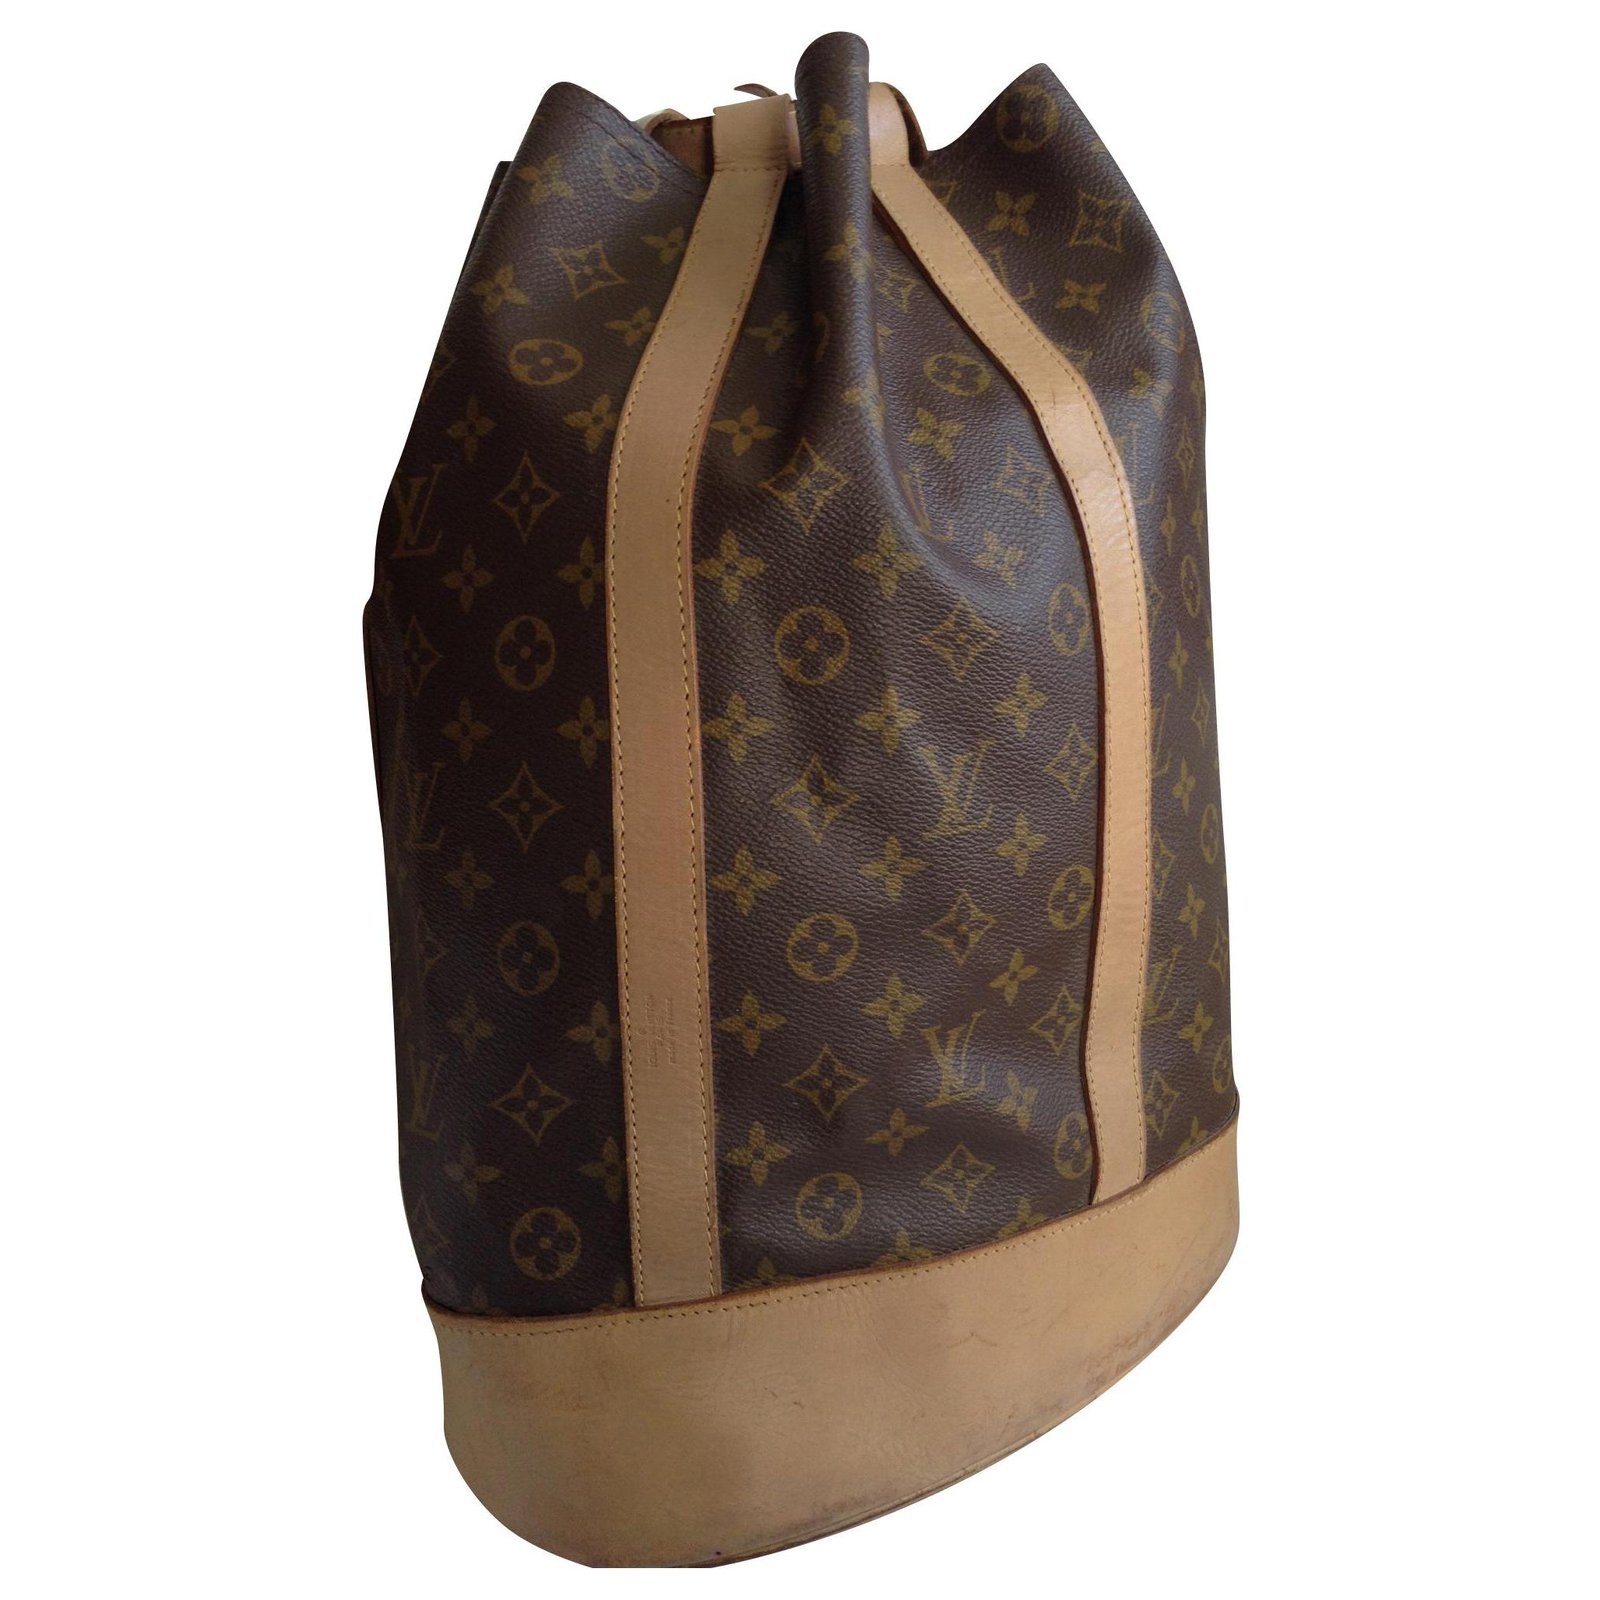 Bags & Backpacks, Lv Gym Bags Louis Vuitton Gym Bags